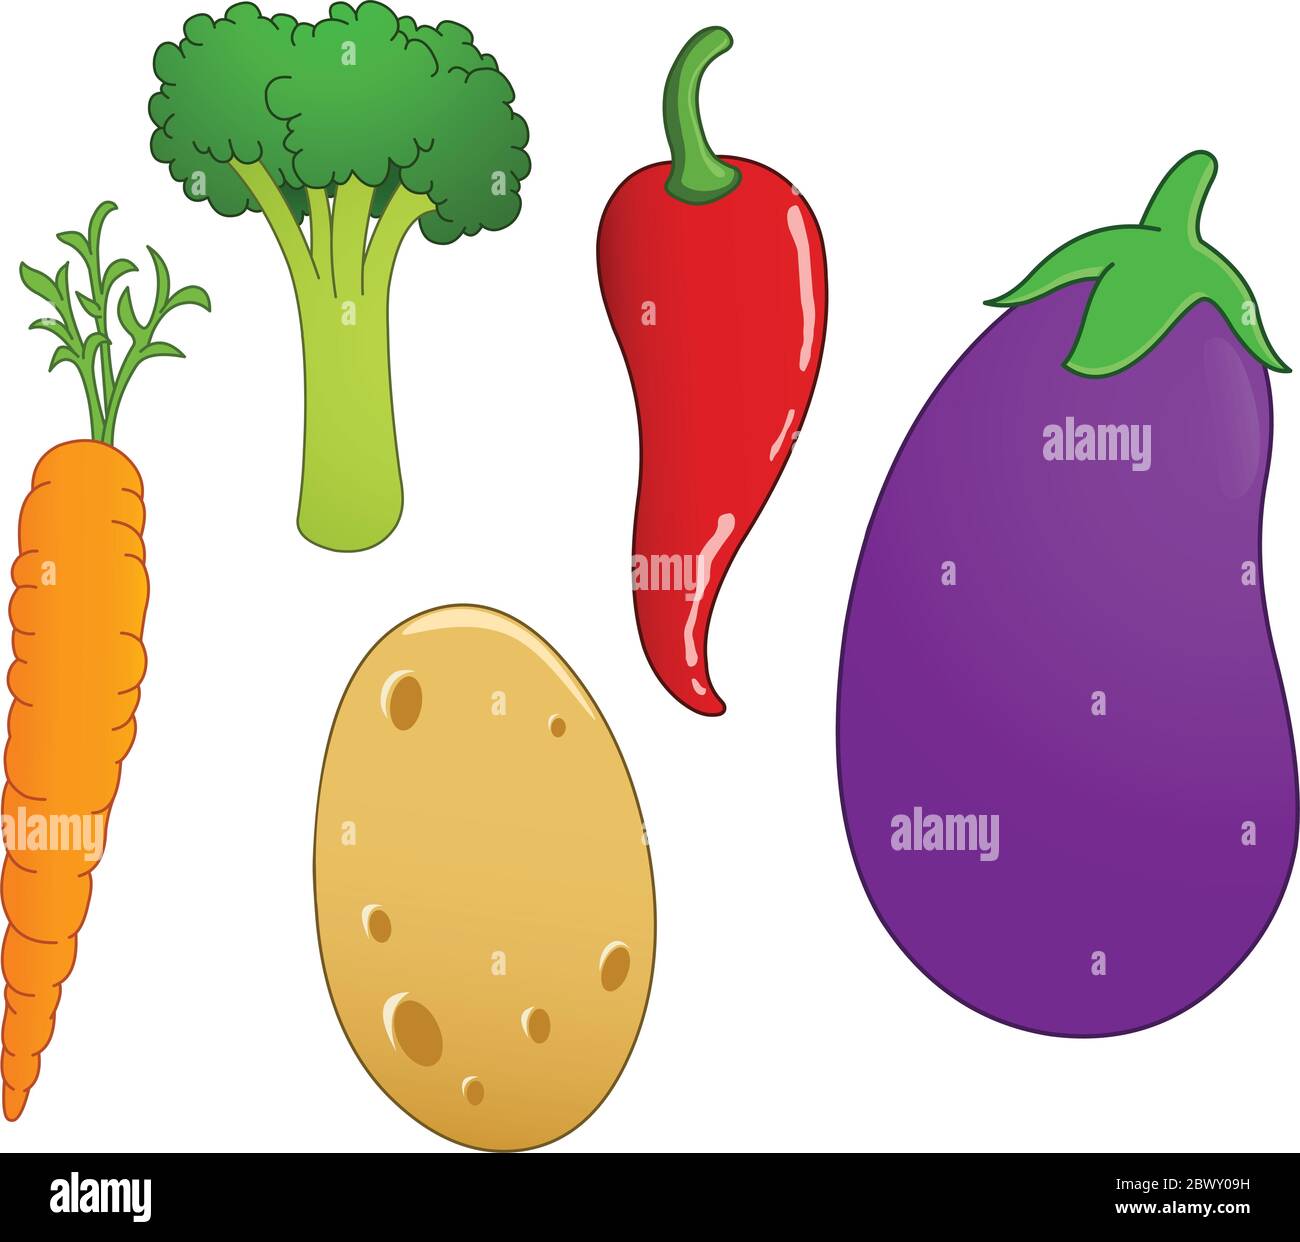 Vegetable set: carrot, broccoli, chili pepper, eggplant and potato Stock Vector